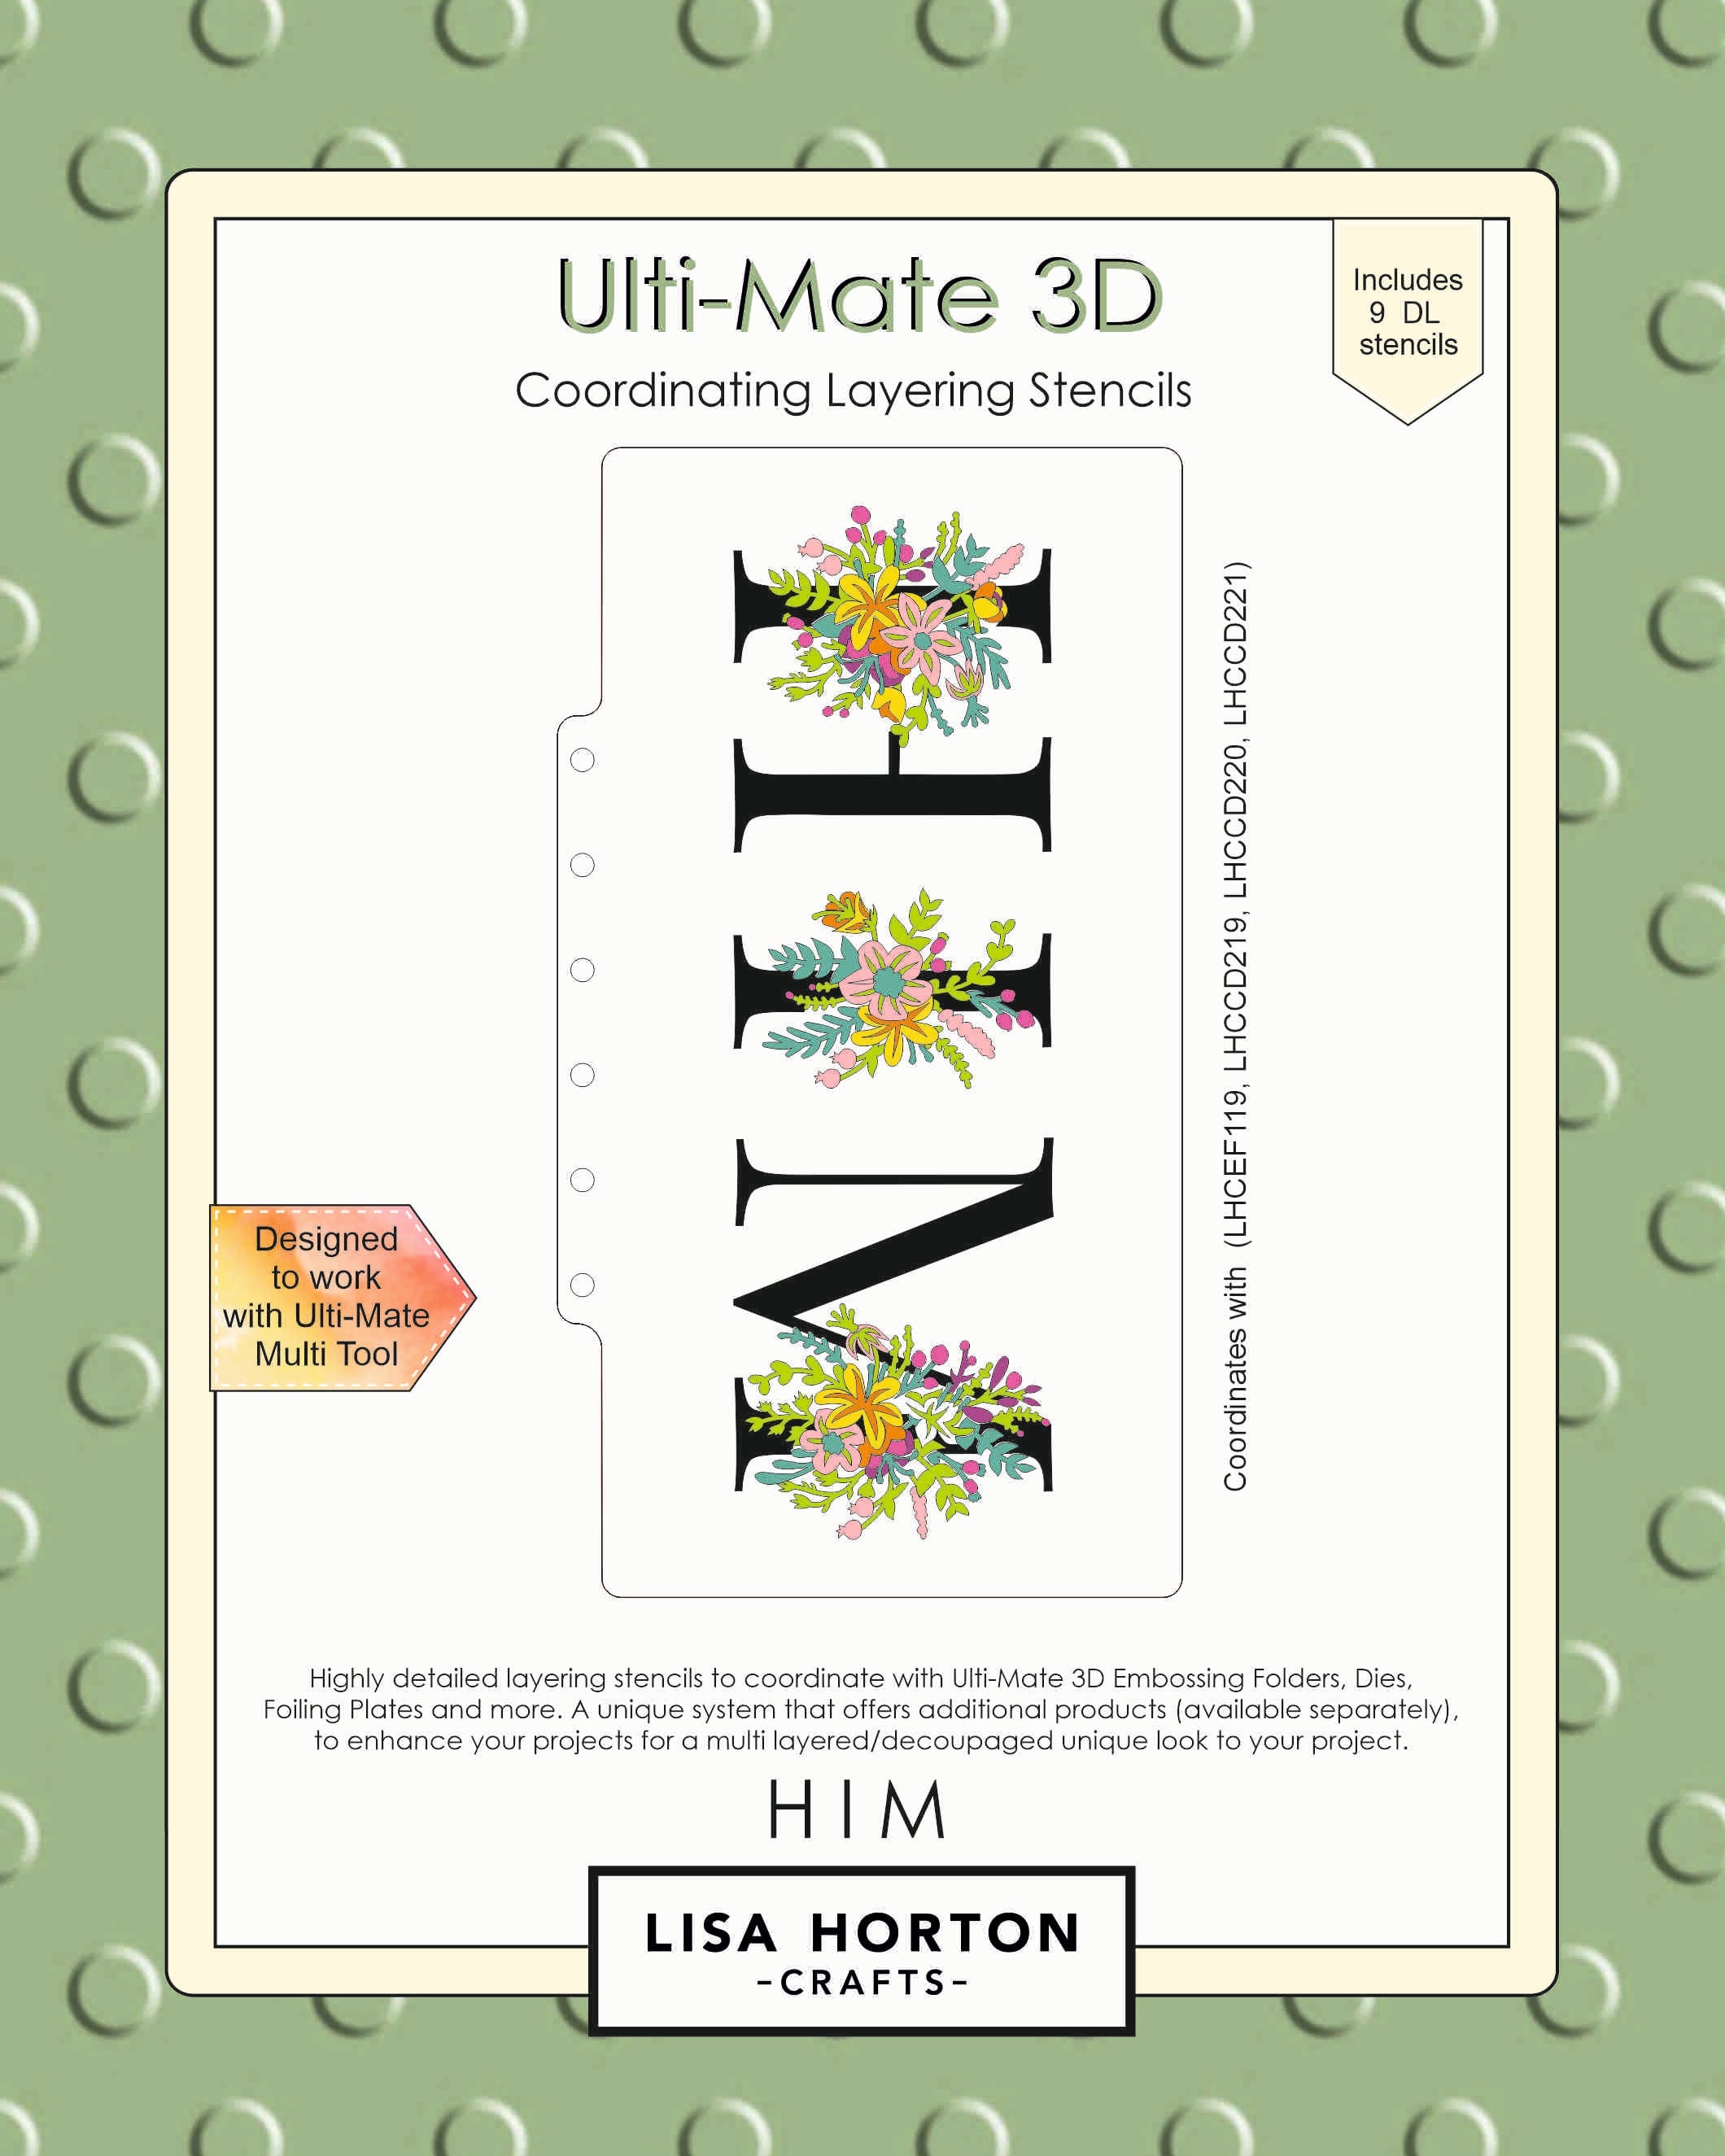 Lisa Horton Crafts Ulti-Mate 3D Slimline Layering Stencils HIM